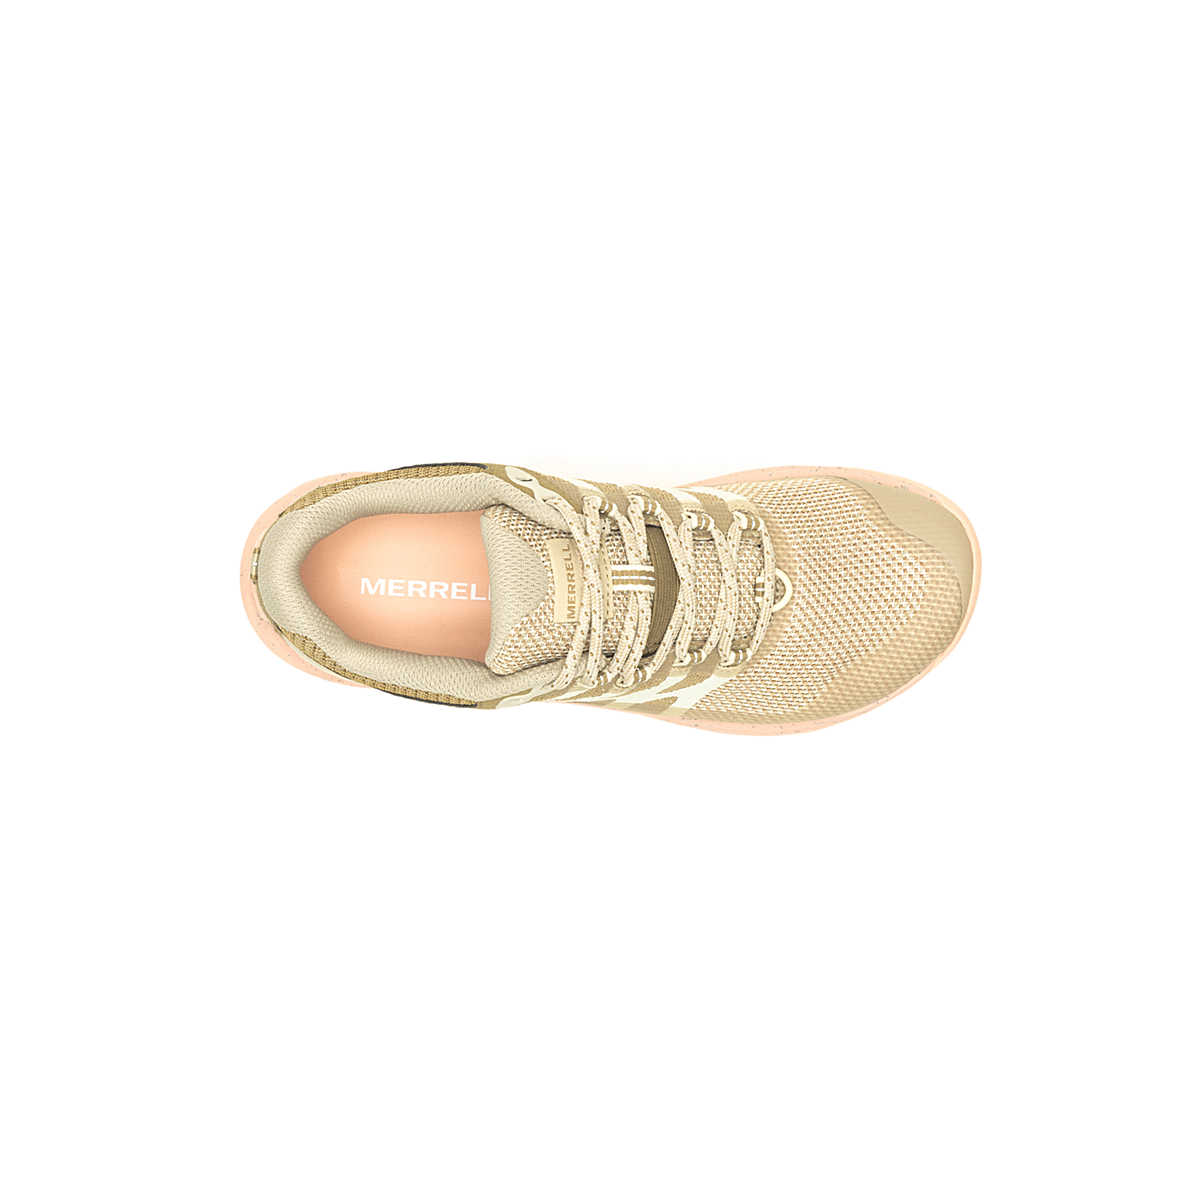 Merrell Women's Antora 3 Sneakers - Cream/Peach